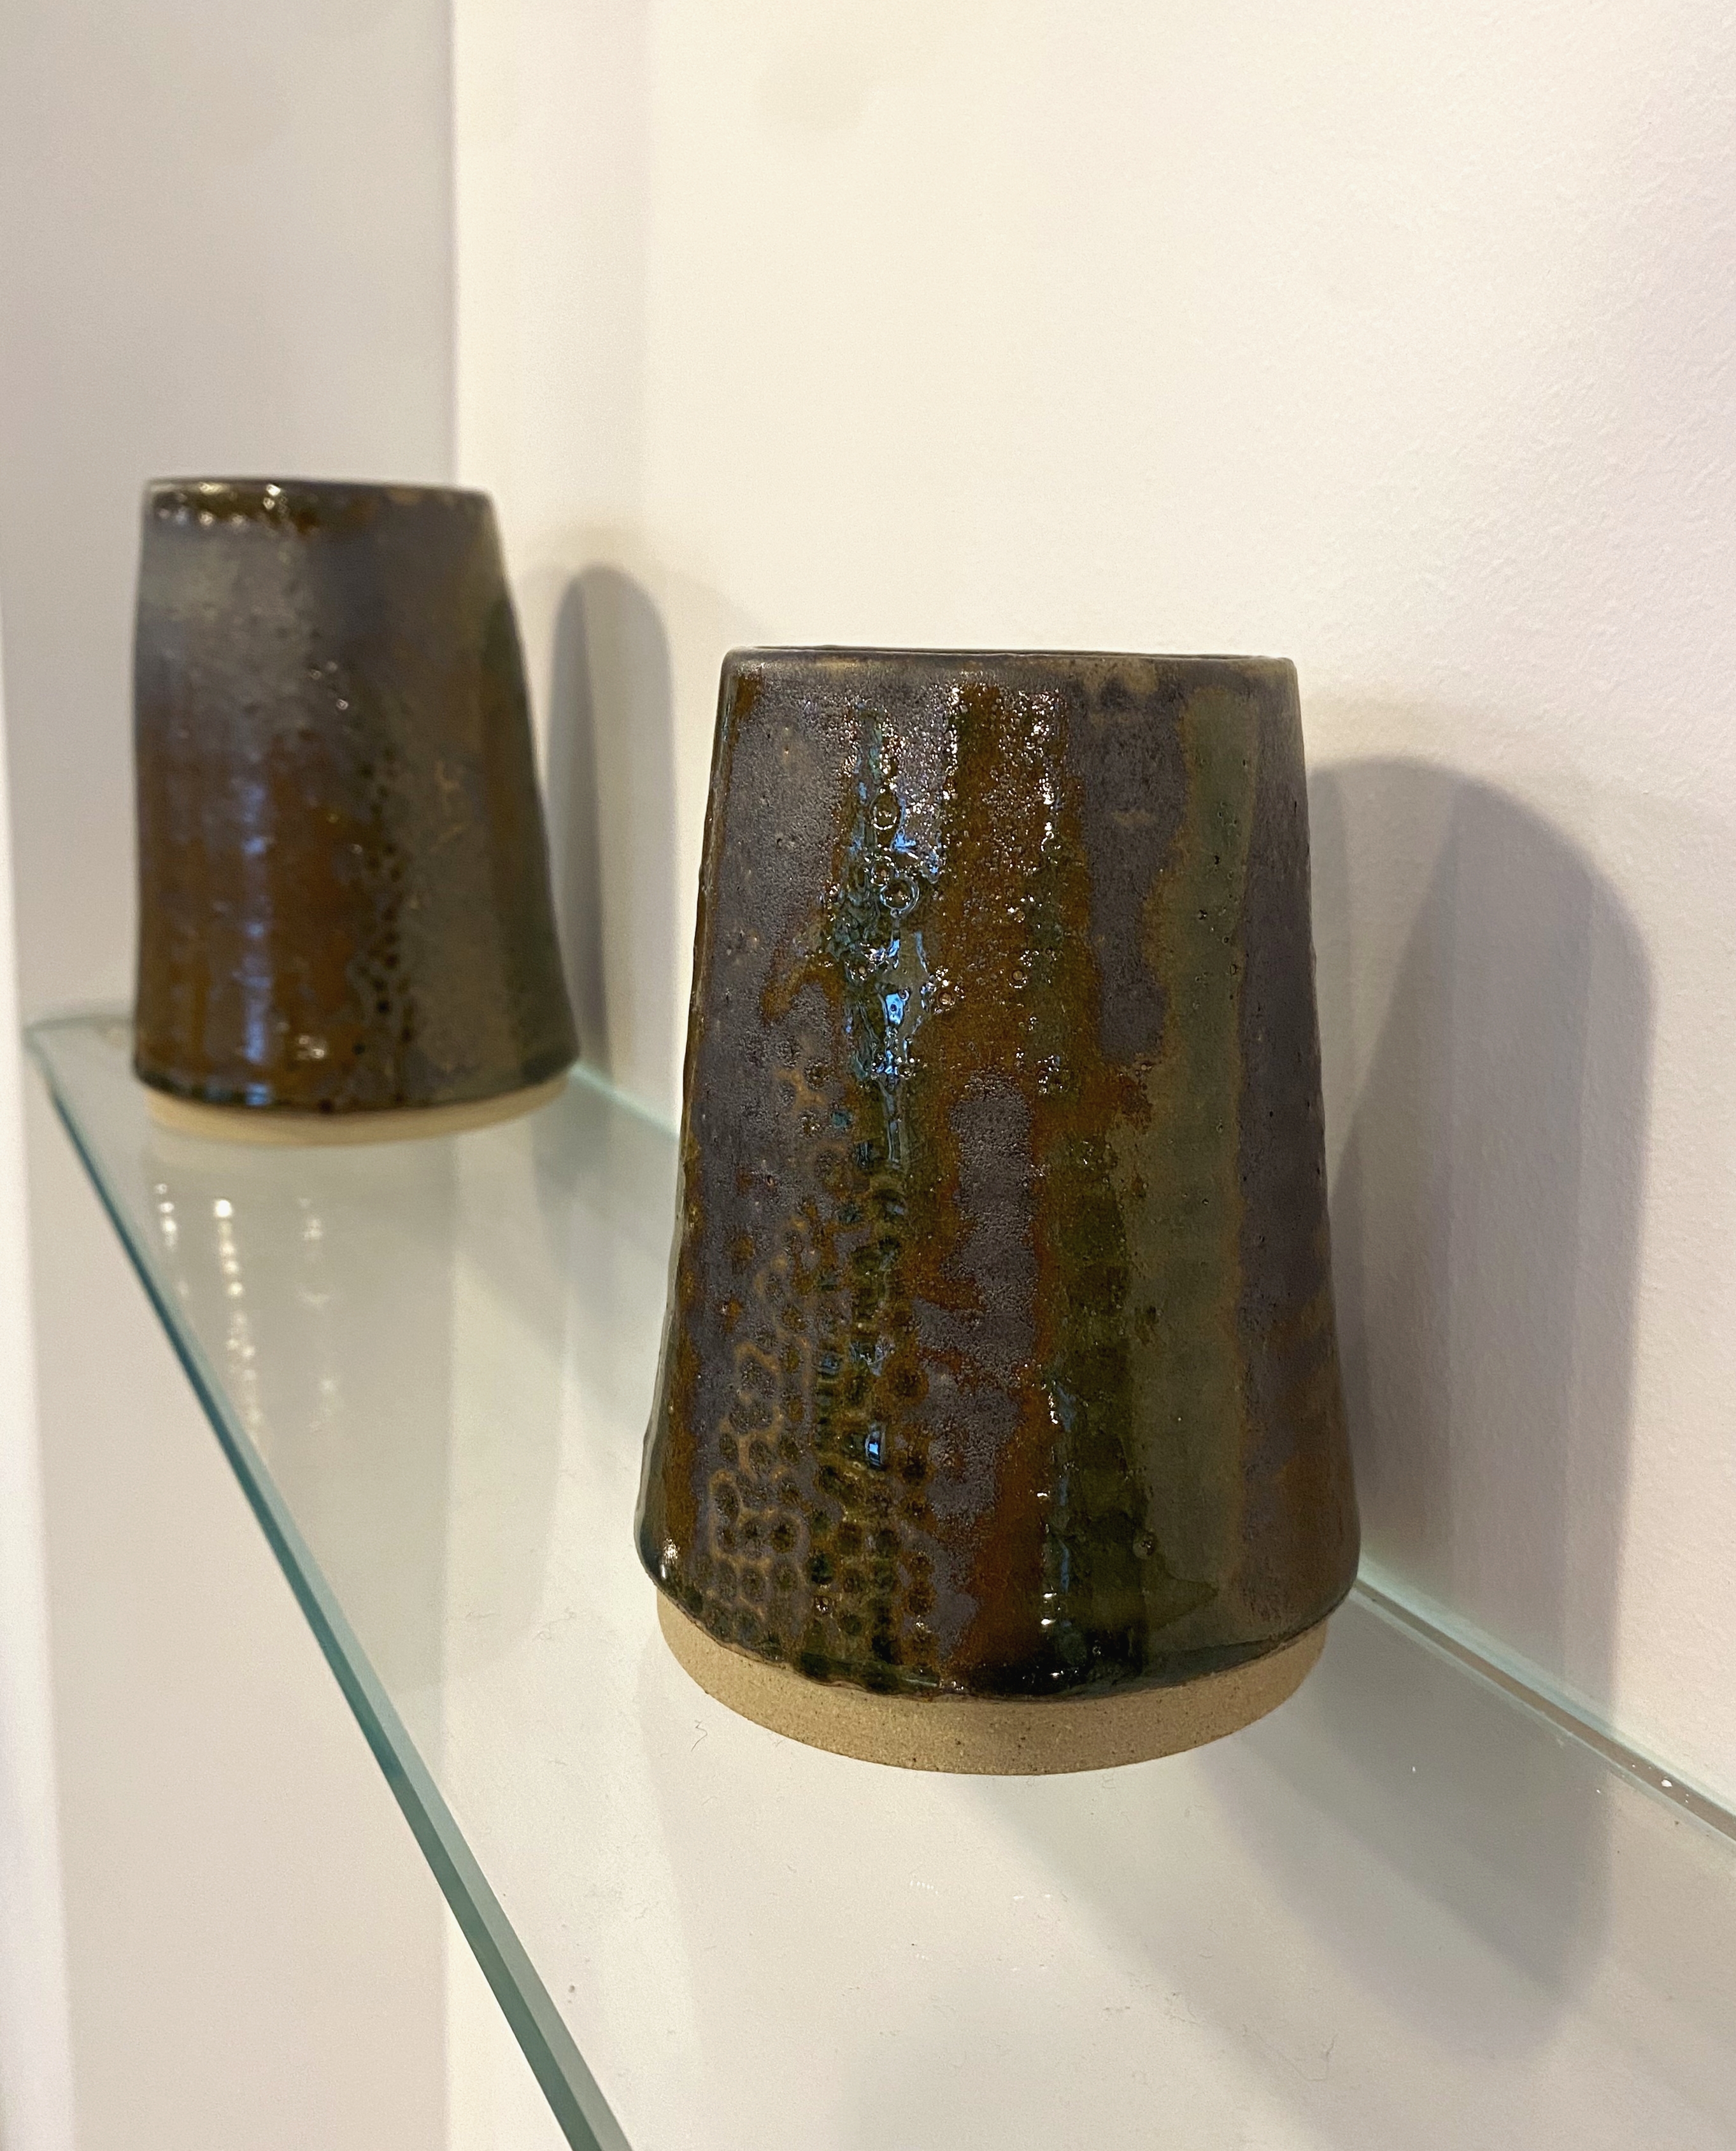 Two Earth Vanadinite Dappled Vases